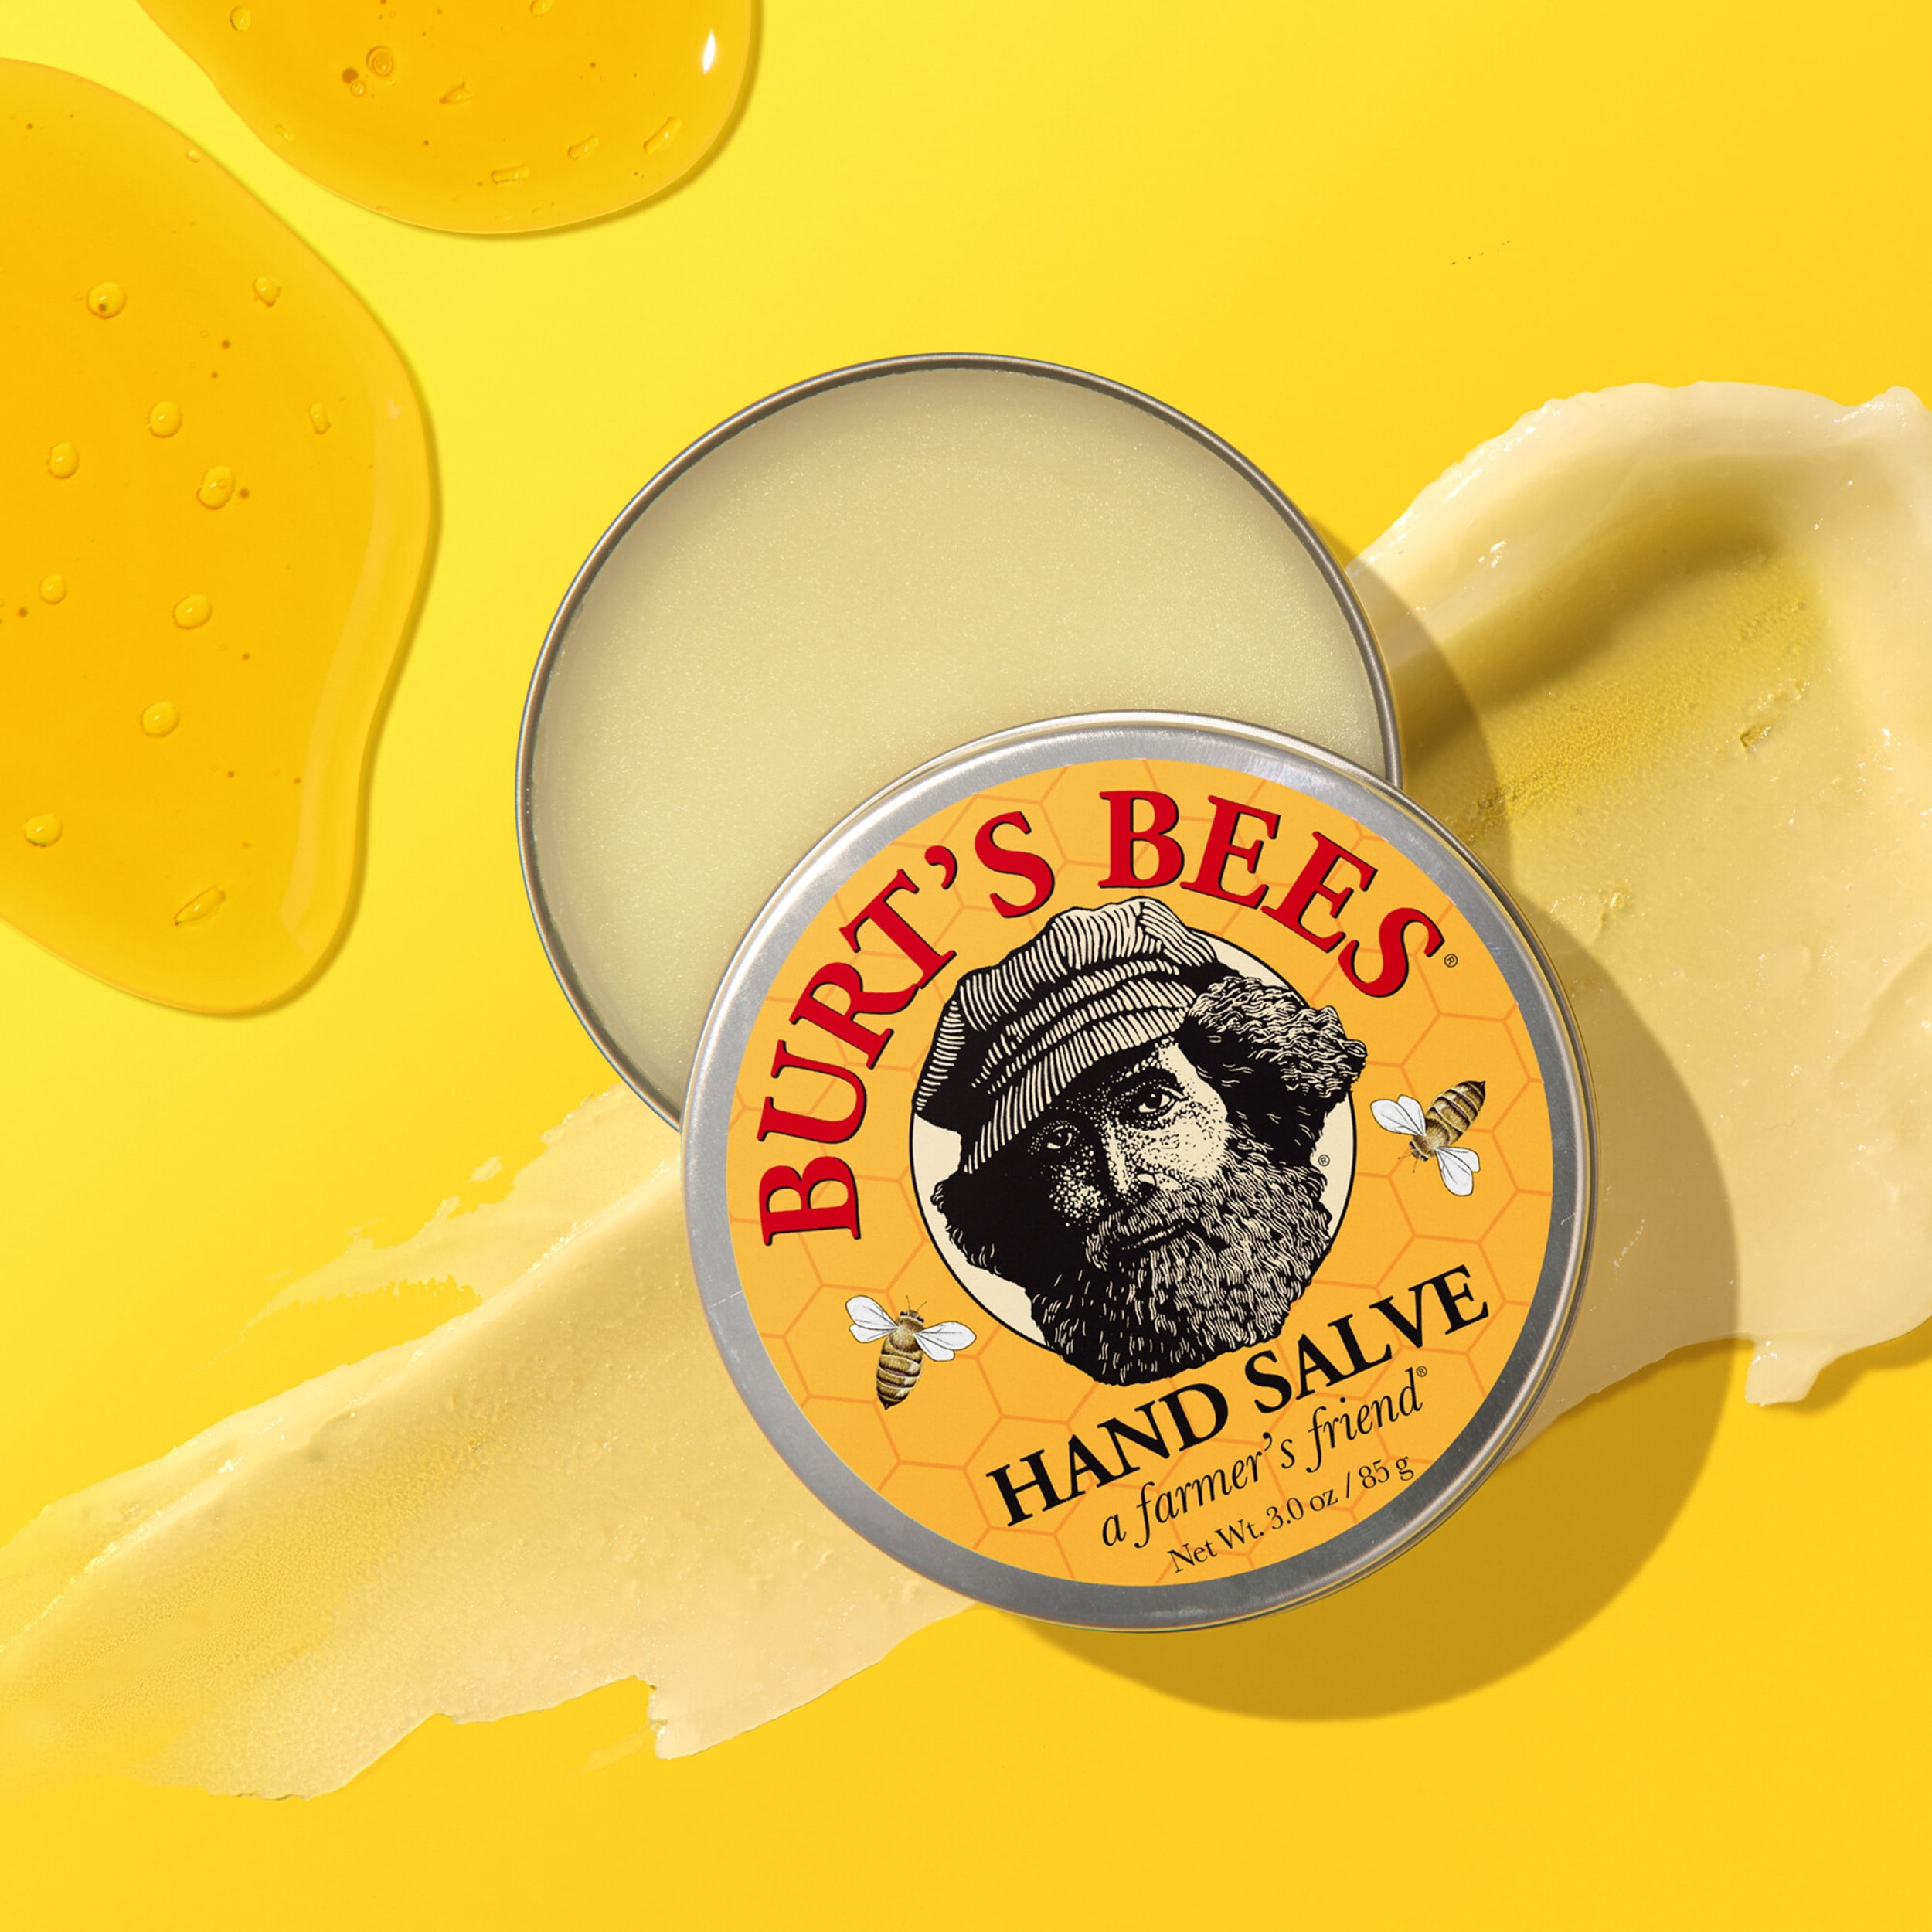 Burt's Bees 100% Natural Beeswax Hand Salve